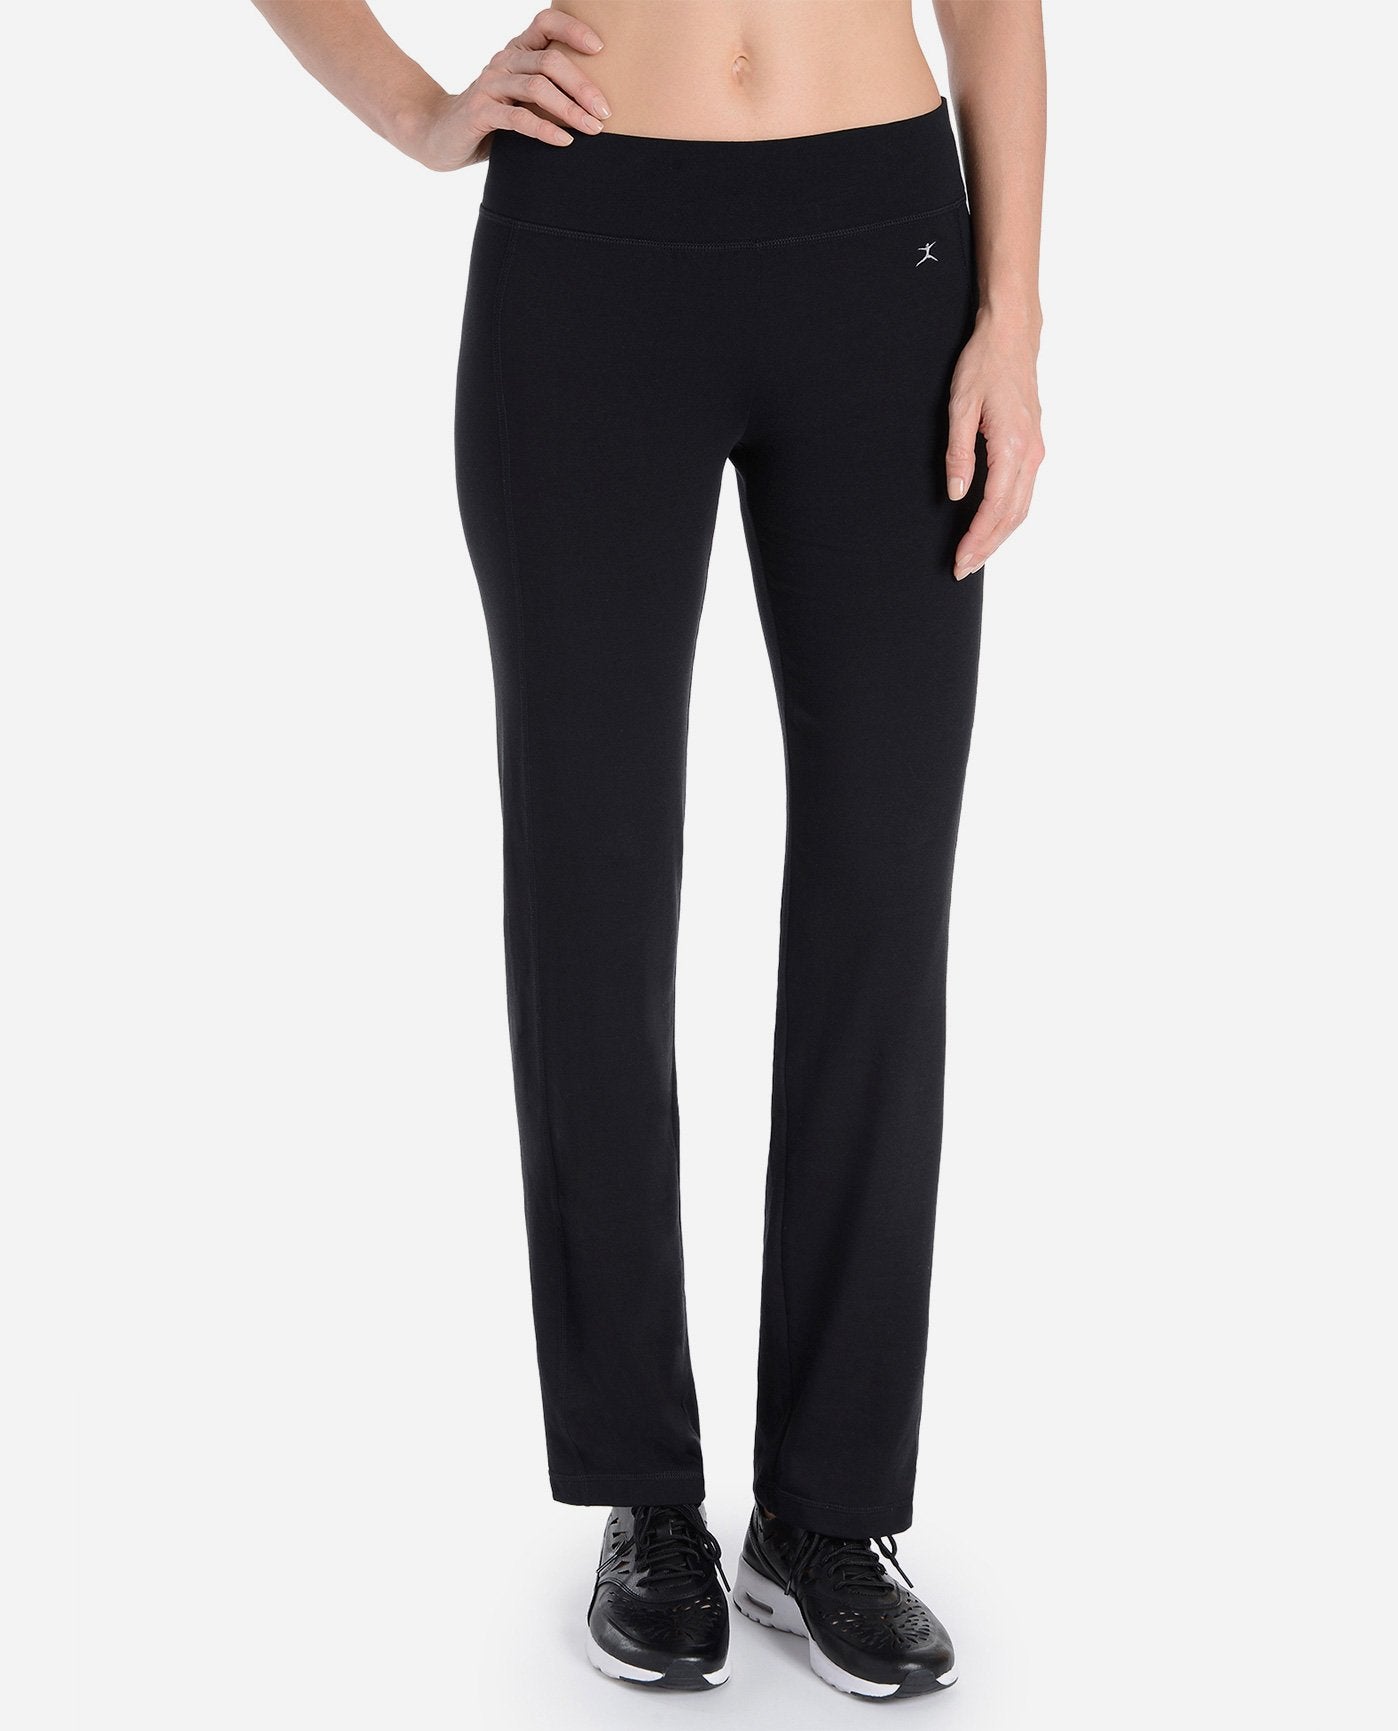 Jockey Women's Activewear Cotton Stretch Bootleg Pant, Black, S at Amazon  Women's Clothing store: Athletic Pants